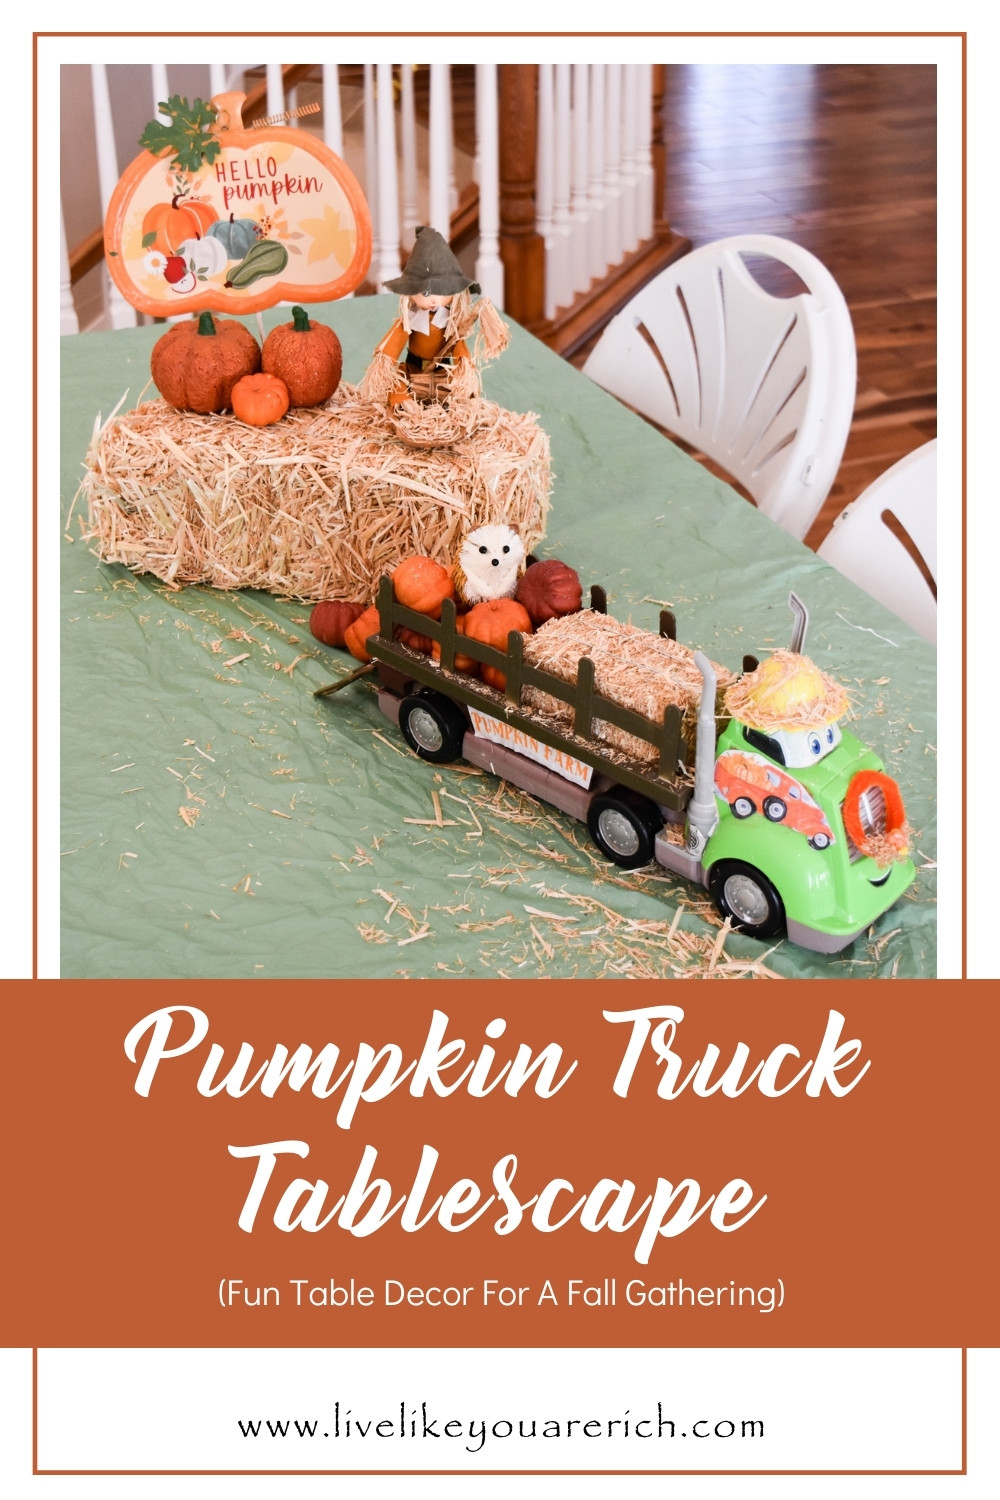 Pumpkin Truck Tablescape - Fun Table Decor For A Fall Gathering.